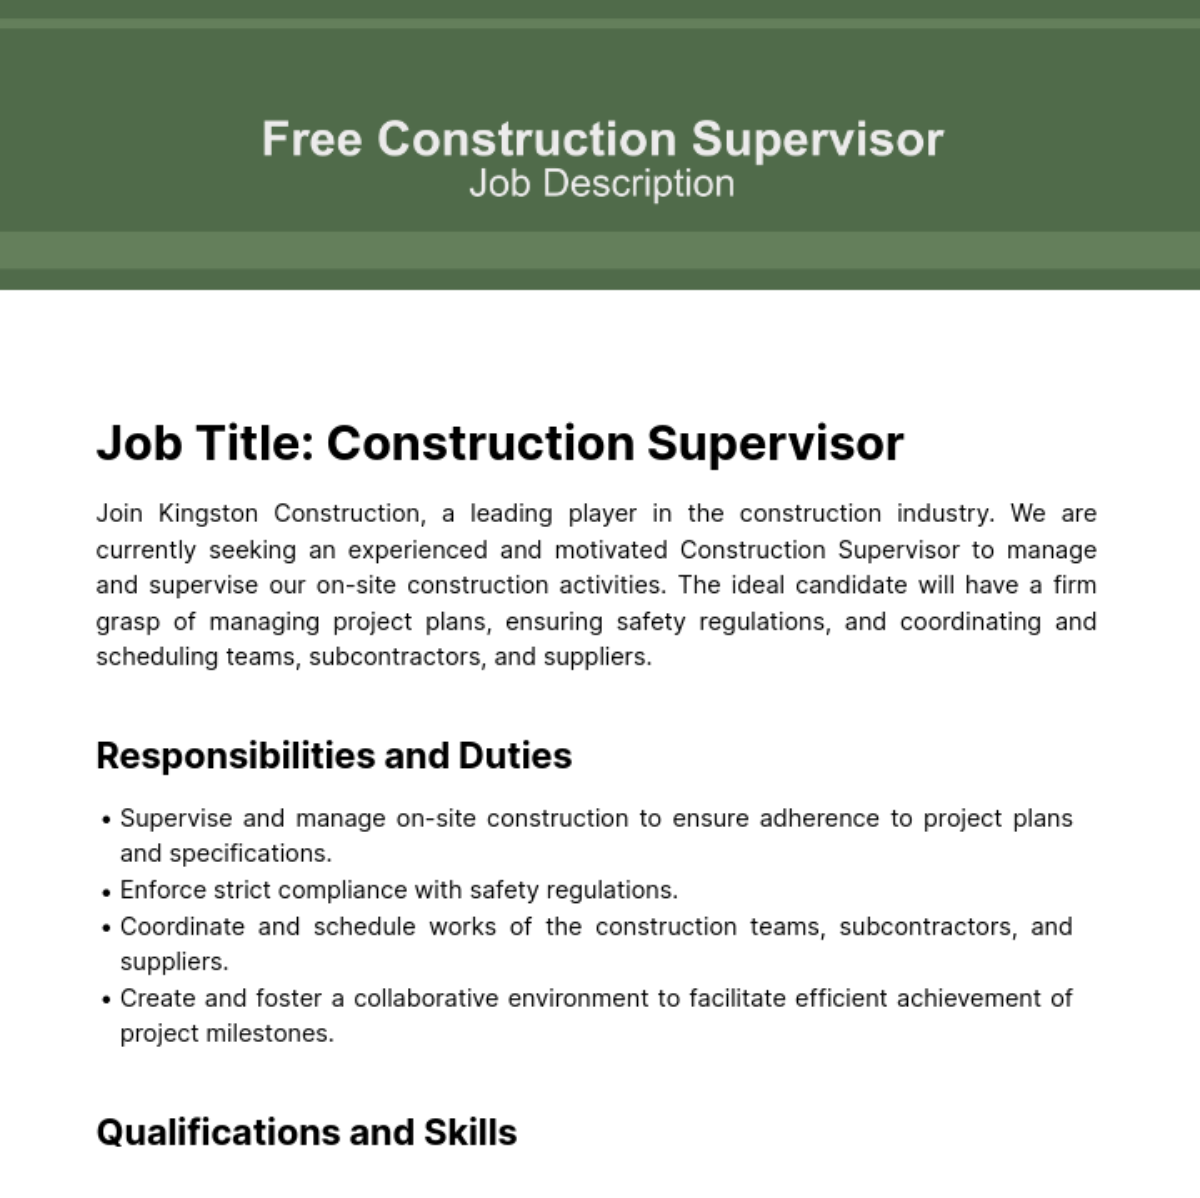 Free Construction Supervisor Job Description Template